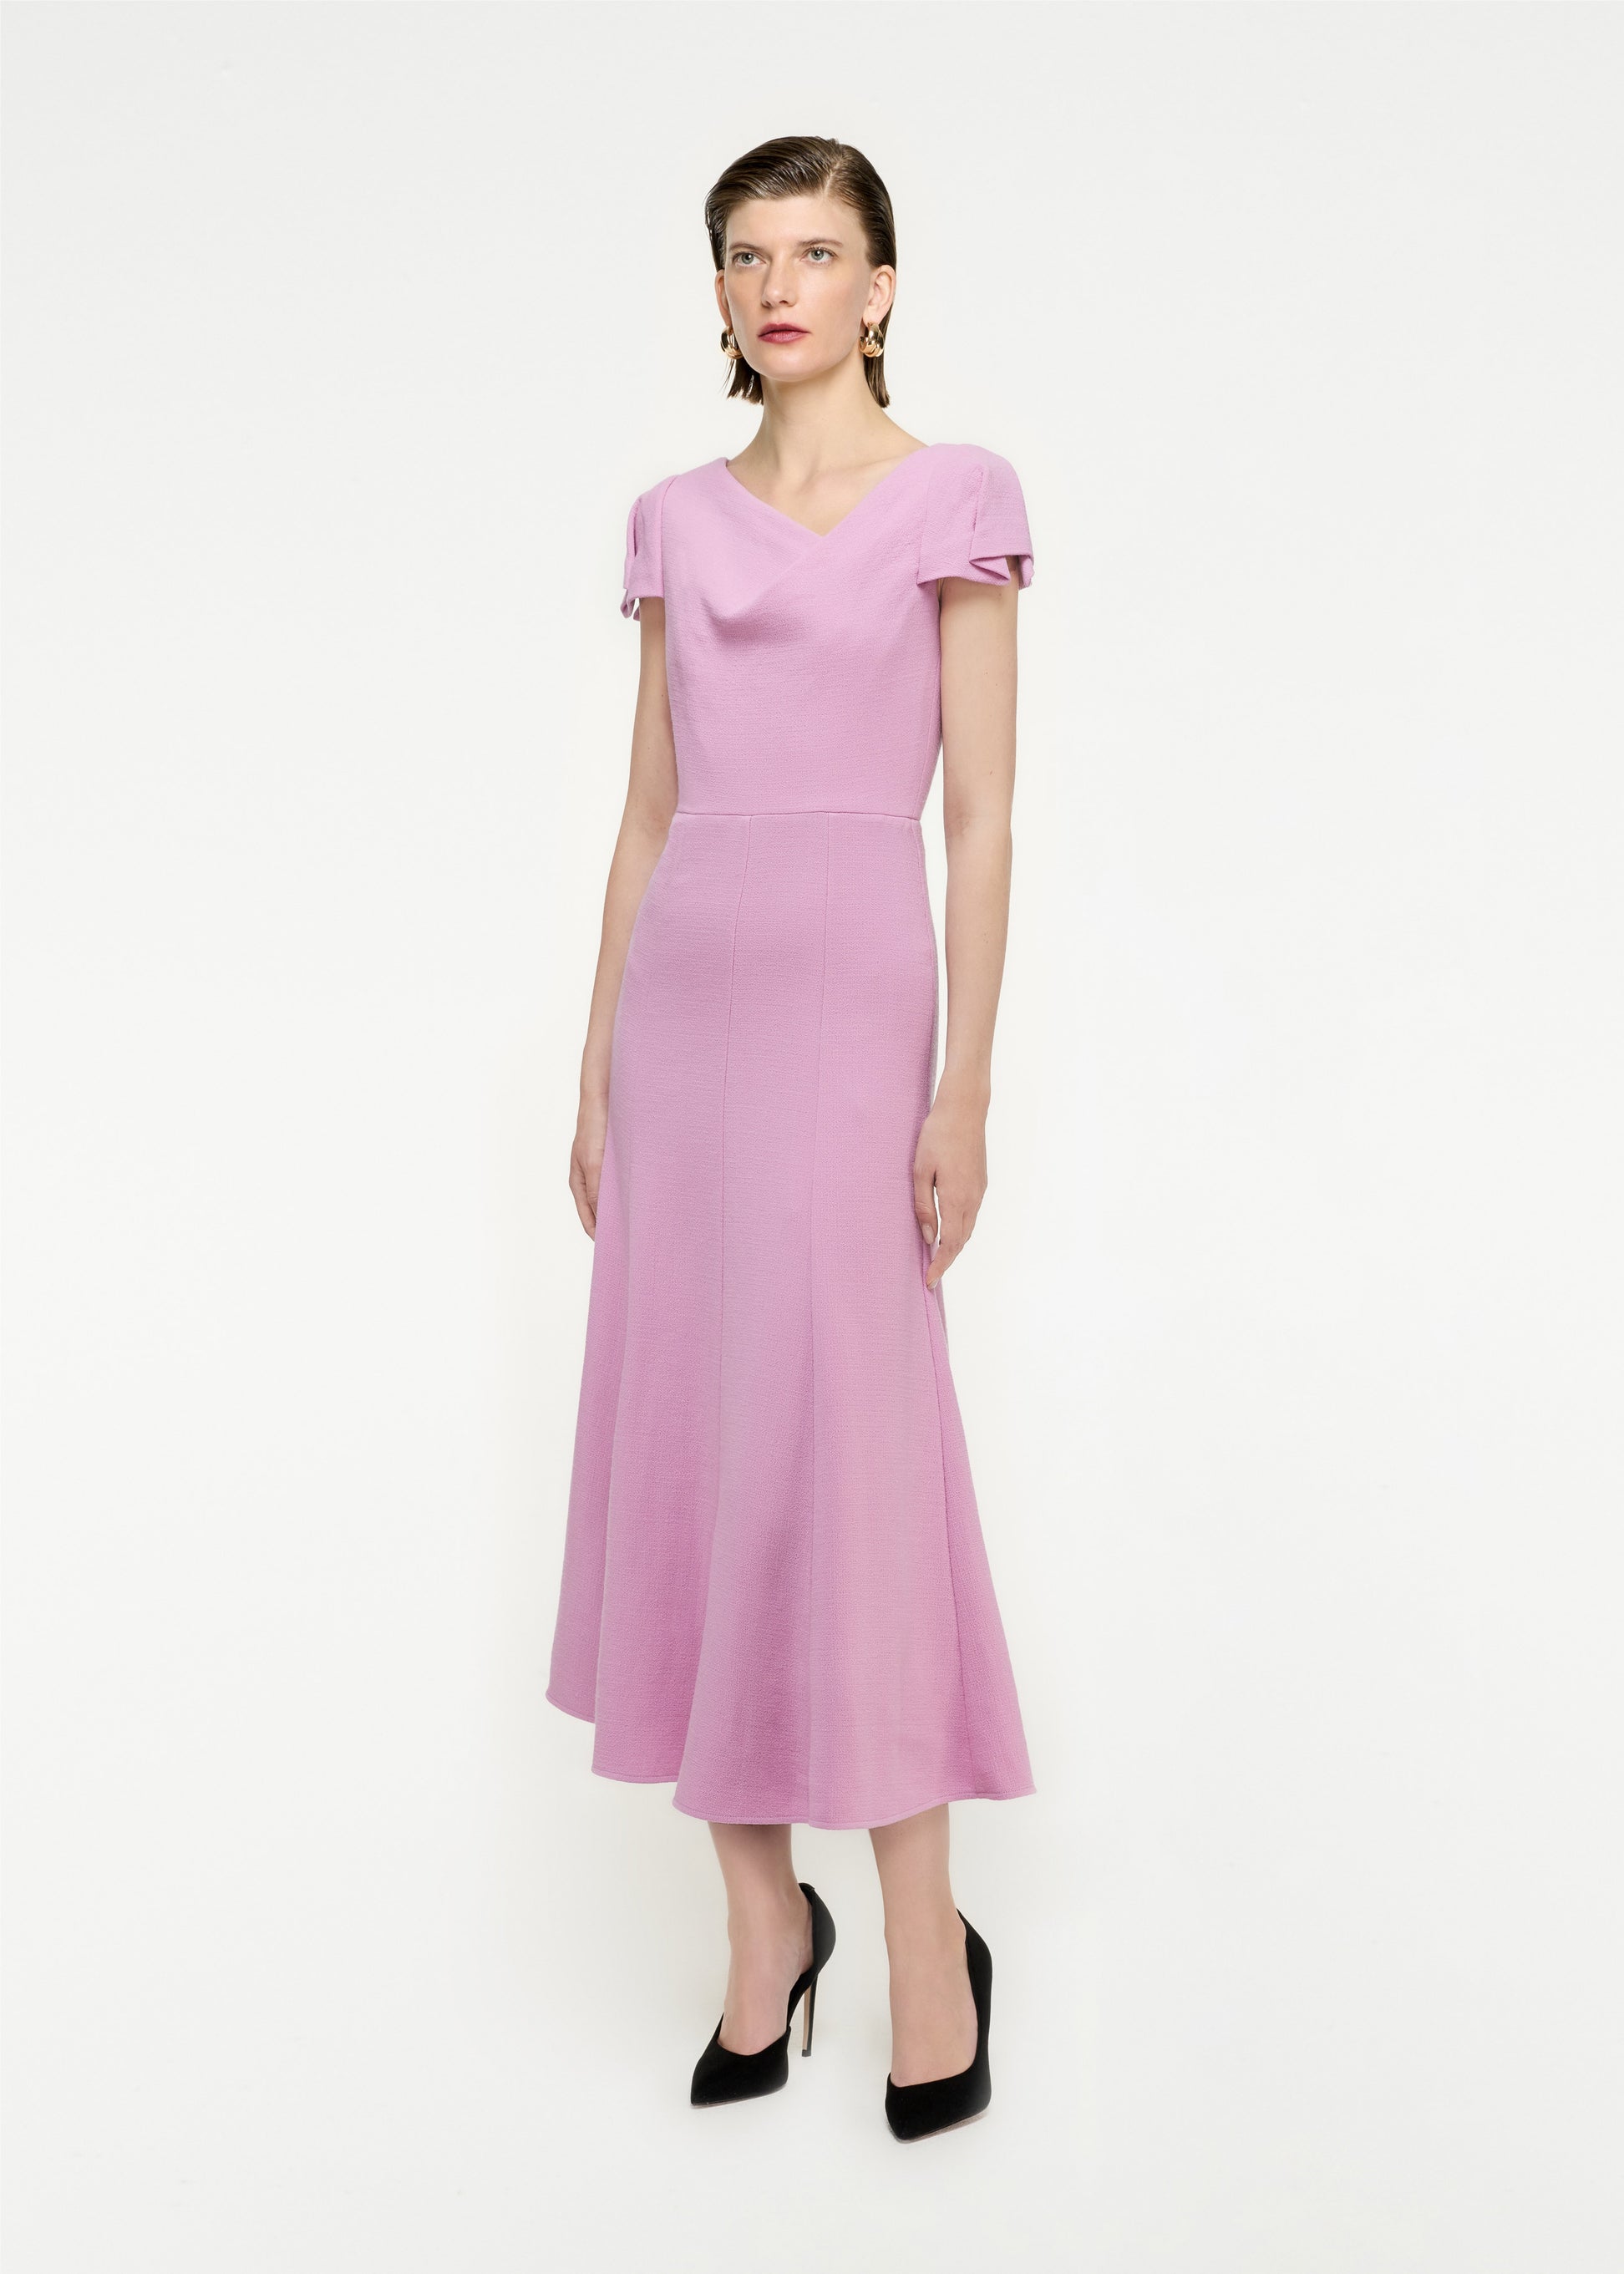 Woman wearing the Cap Sleeve Wool Crepe Midi Dress in Pink